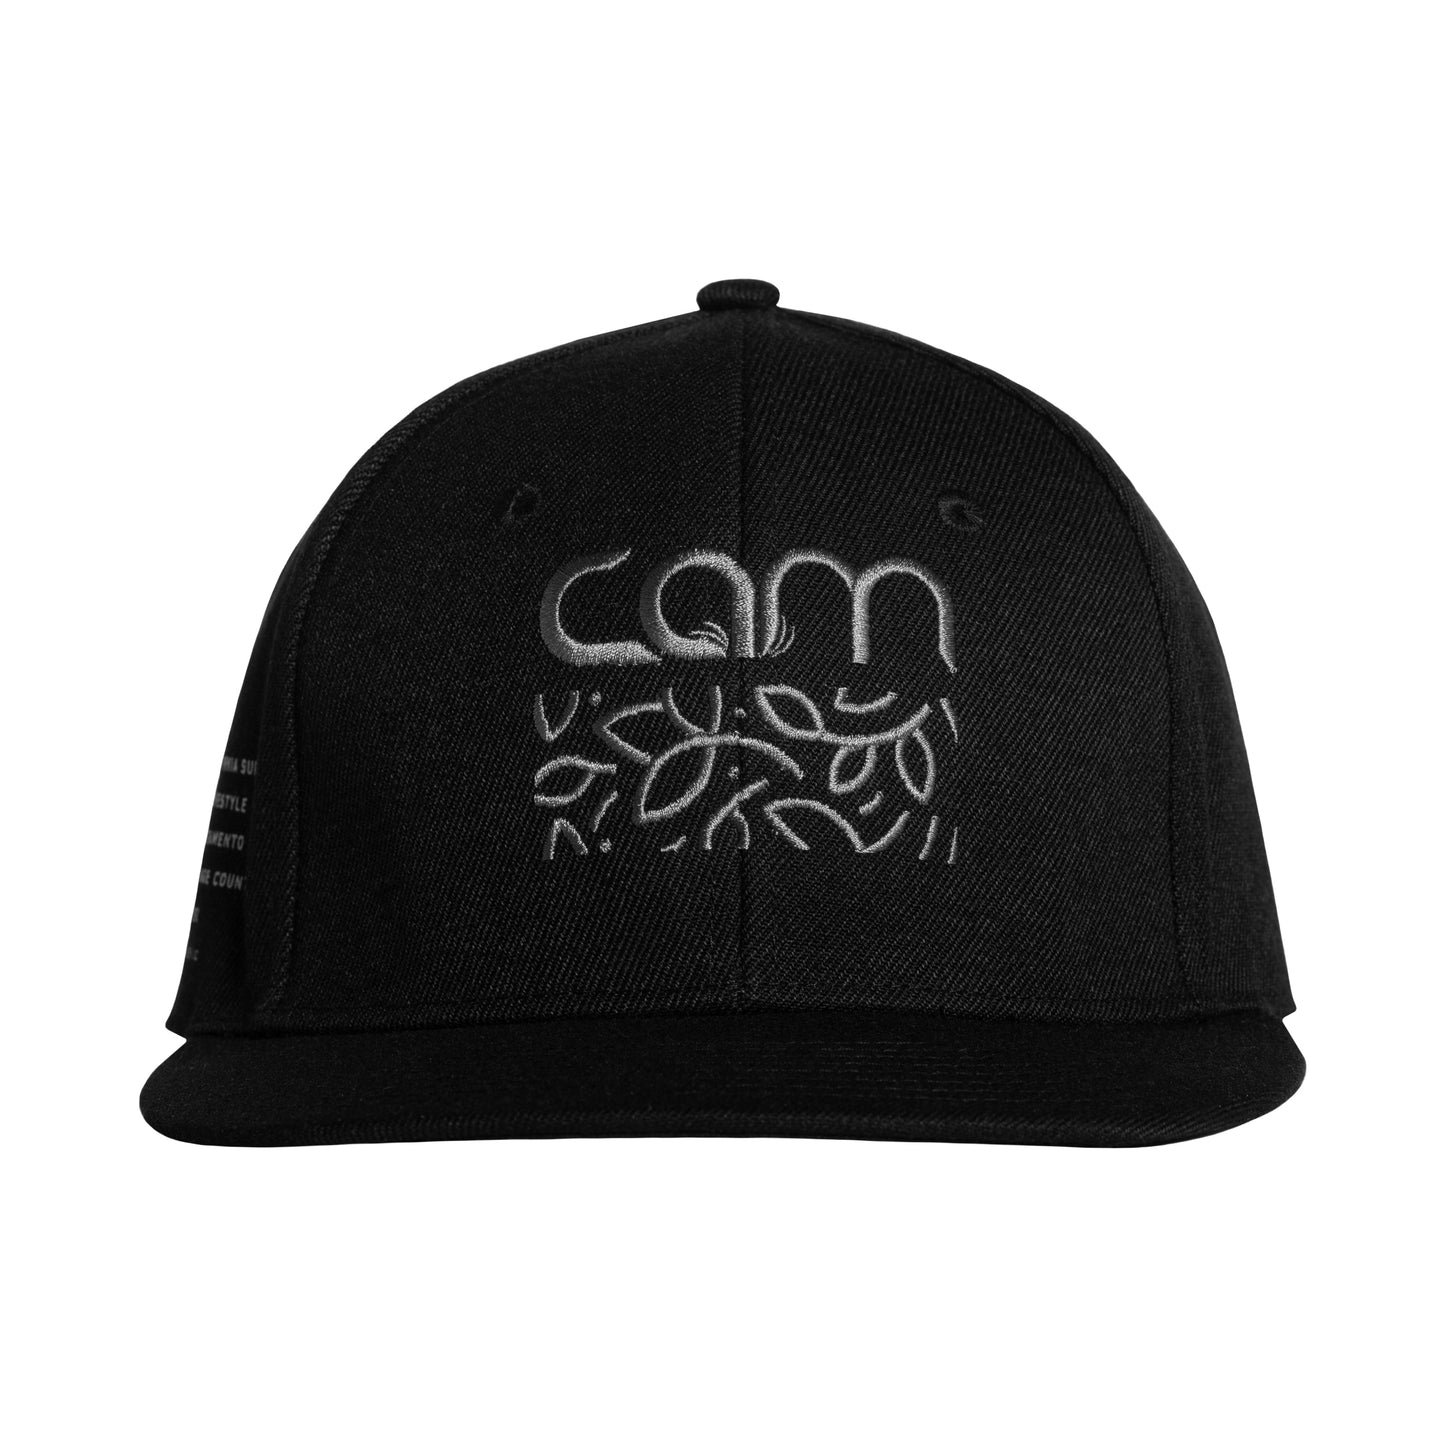 CAM PR Club Snapback - Cool Gray